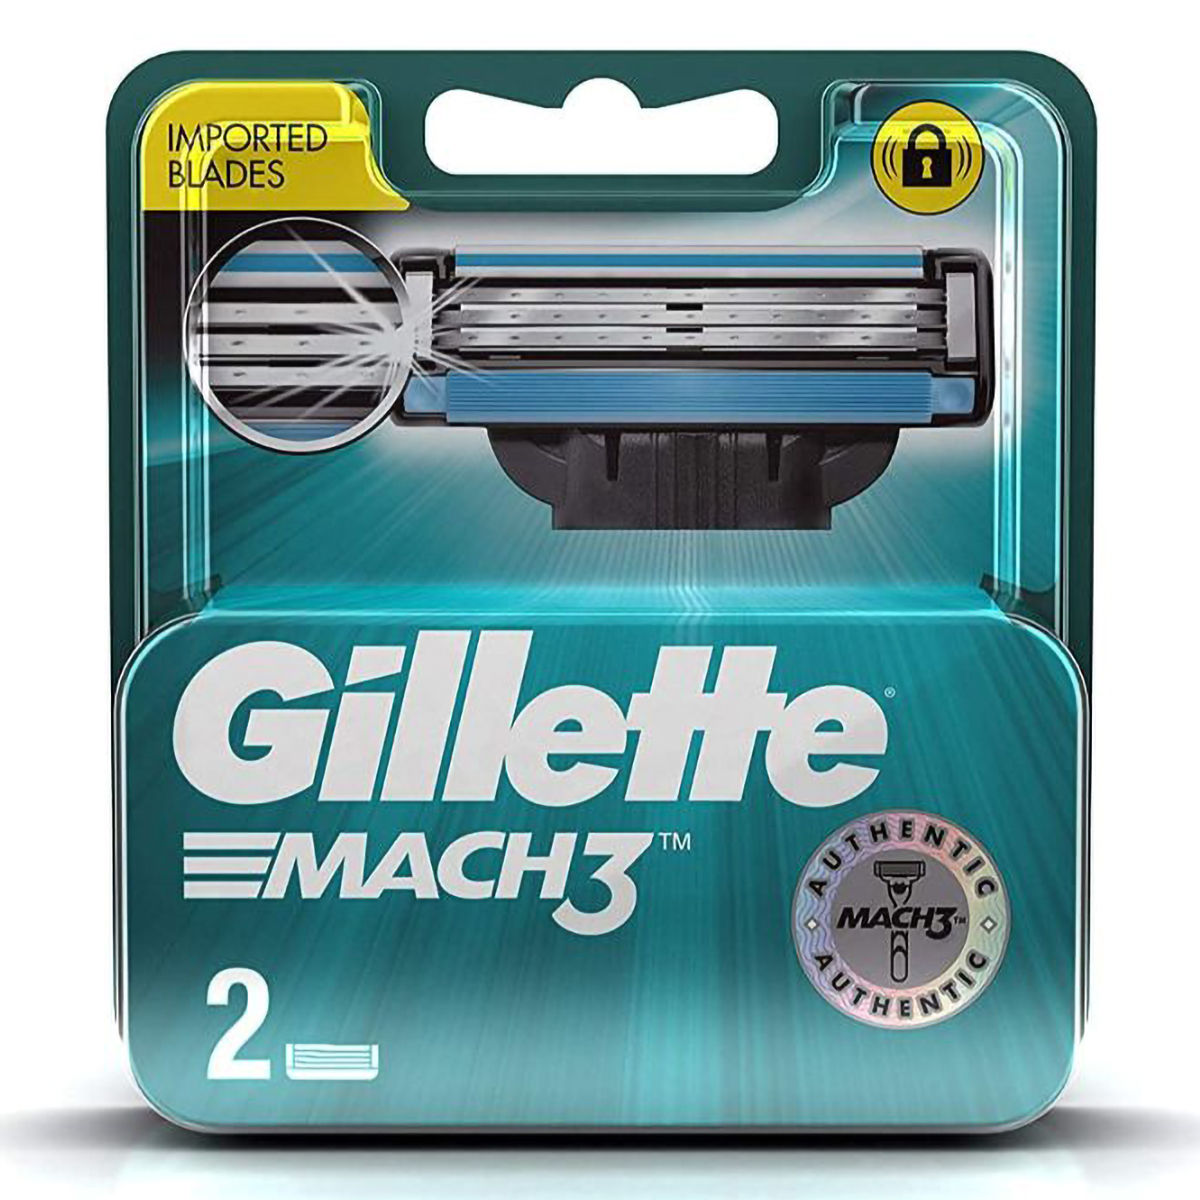 Buy Gillette Mach 3 Cartridge, 2 Count Online